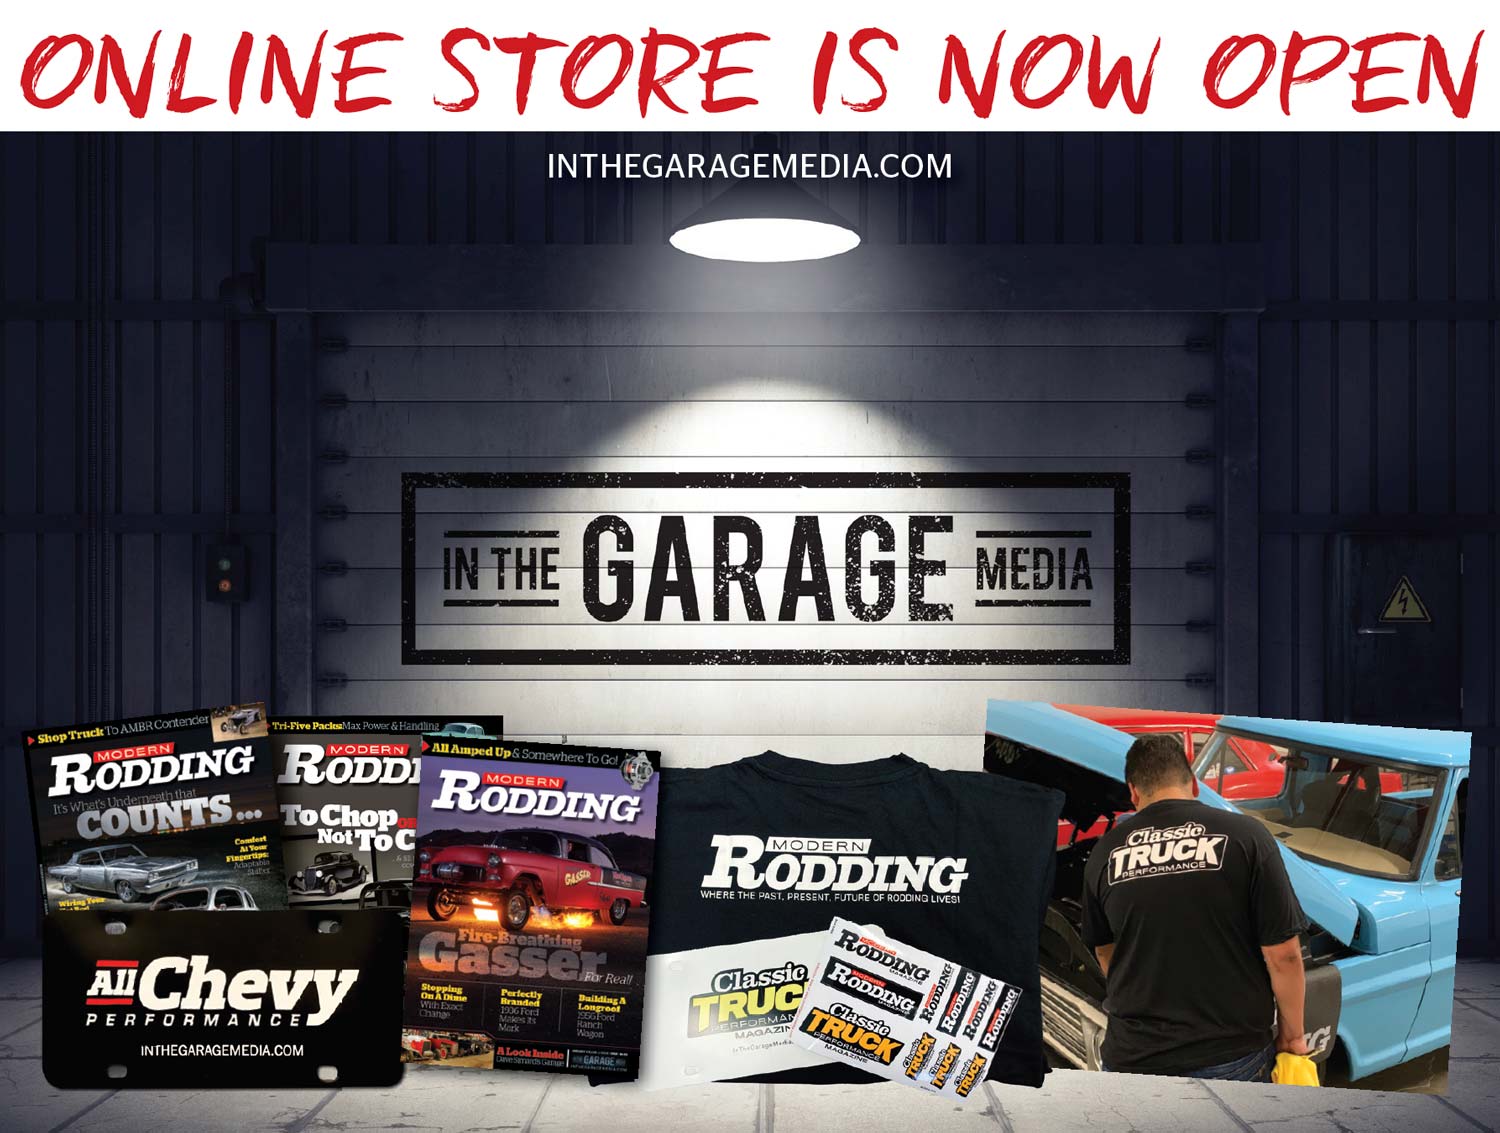 In the Garage Media Online Store Advertisement